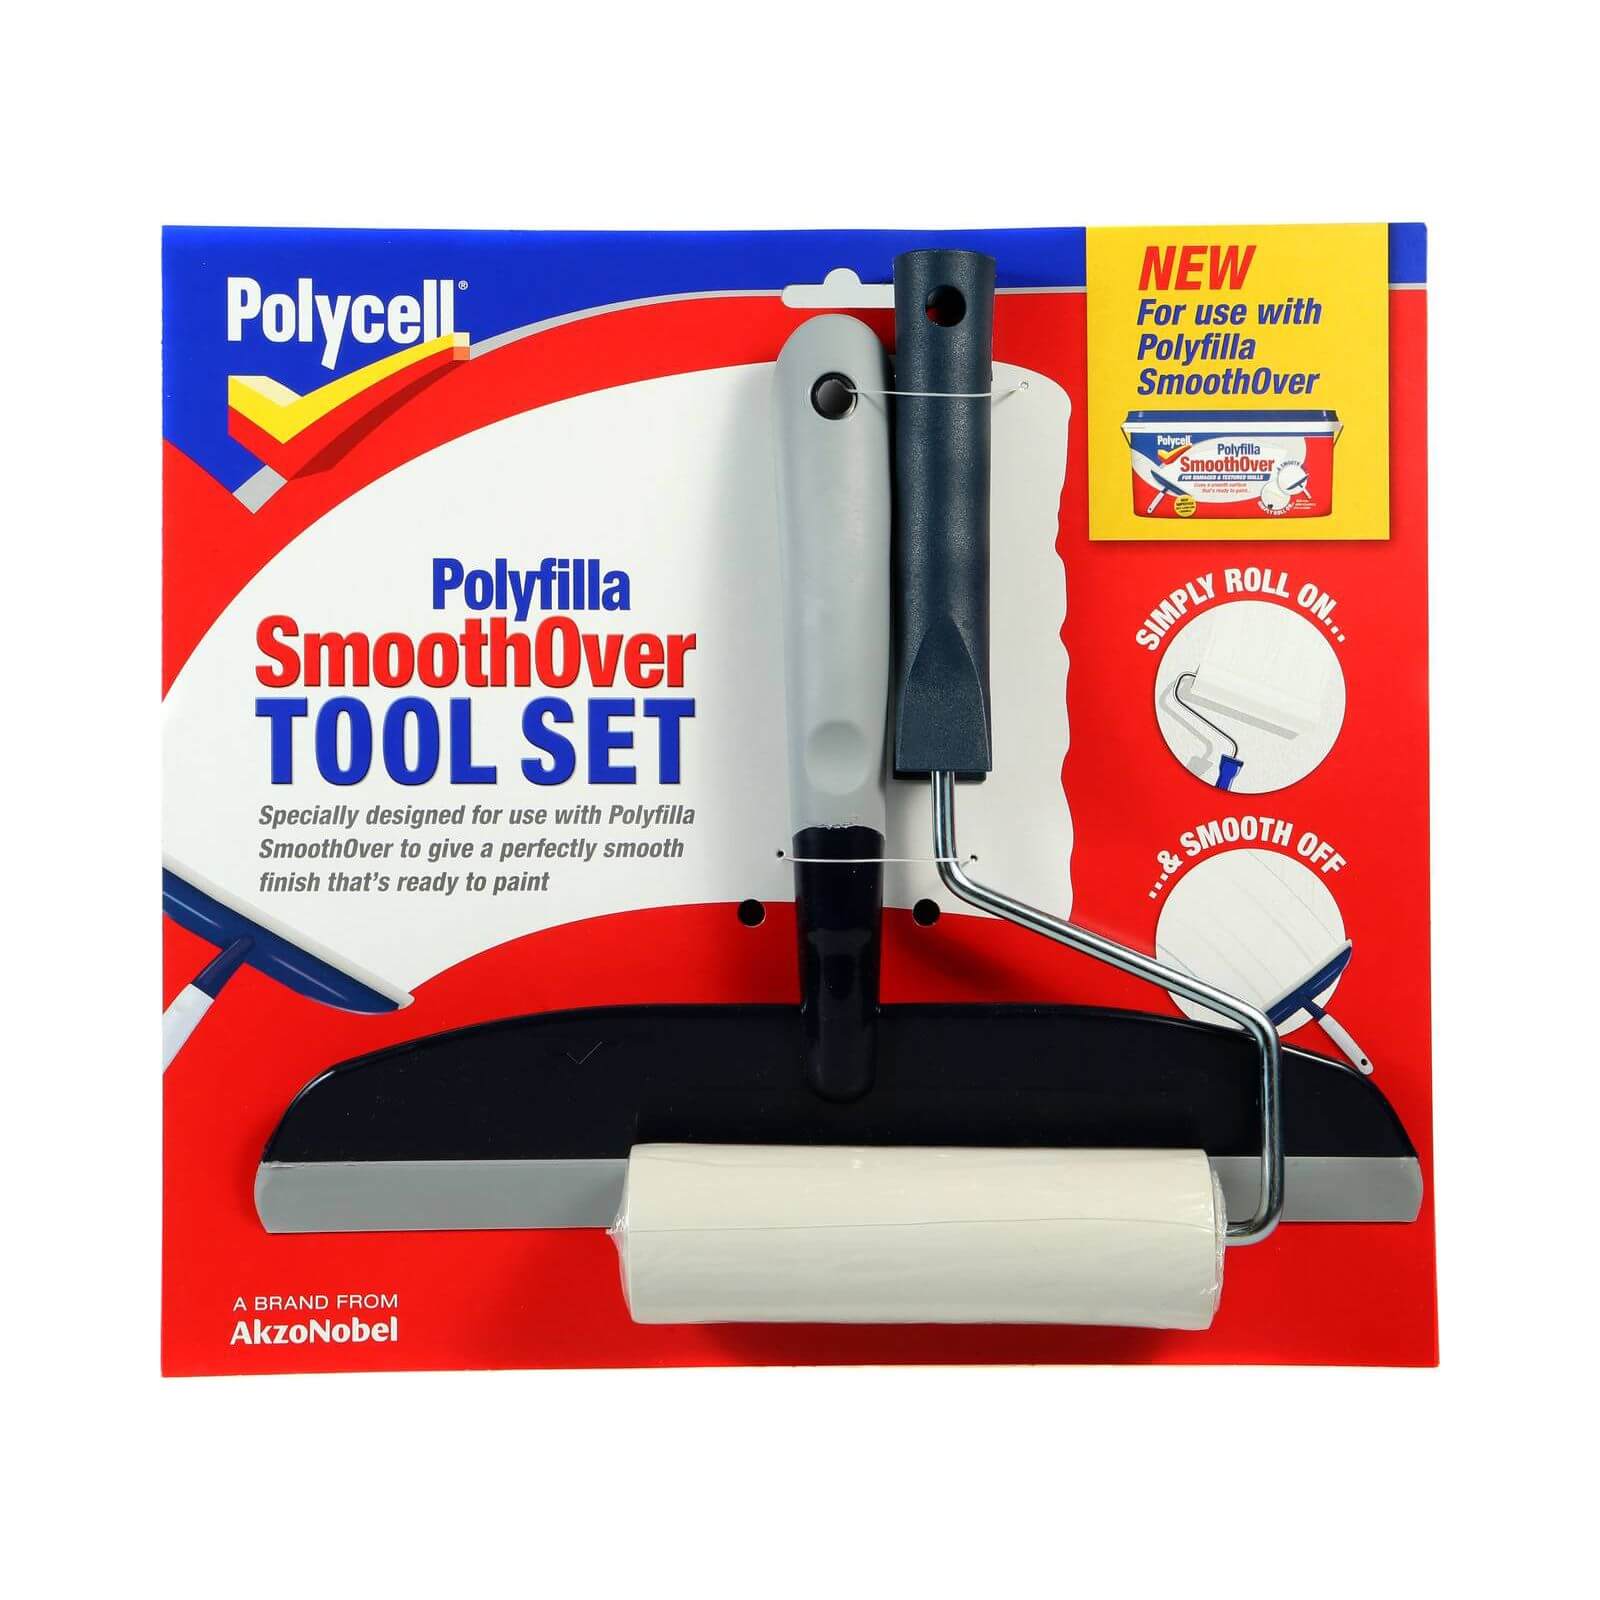 Polycell Polyfilla Smoothover Tool Set